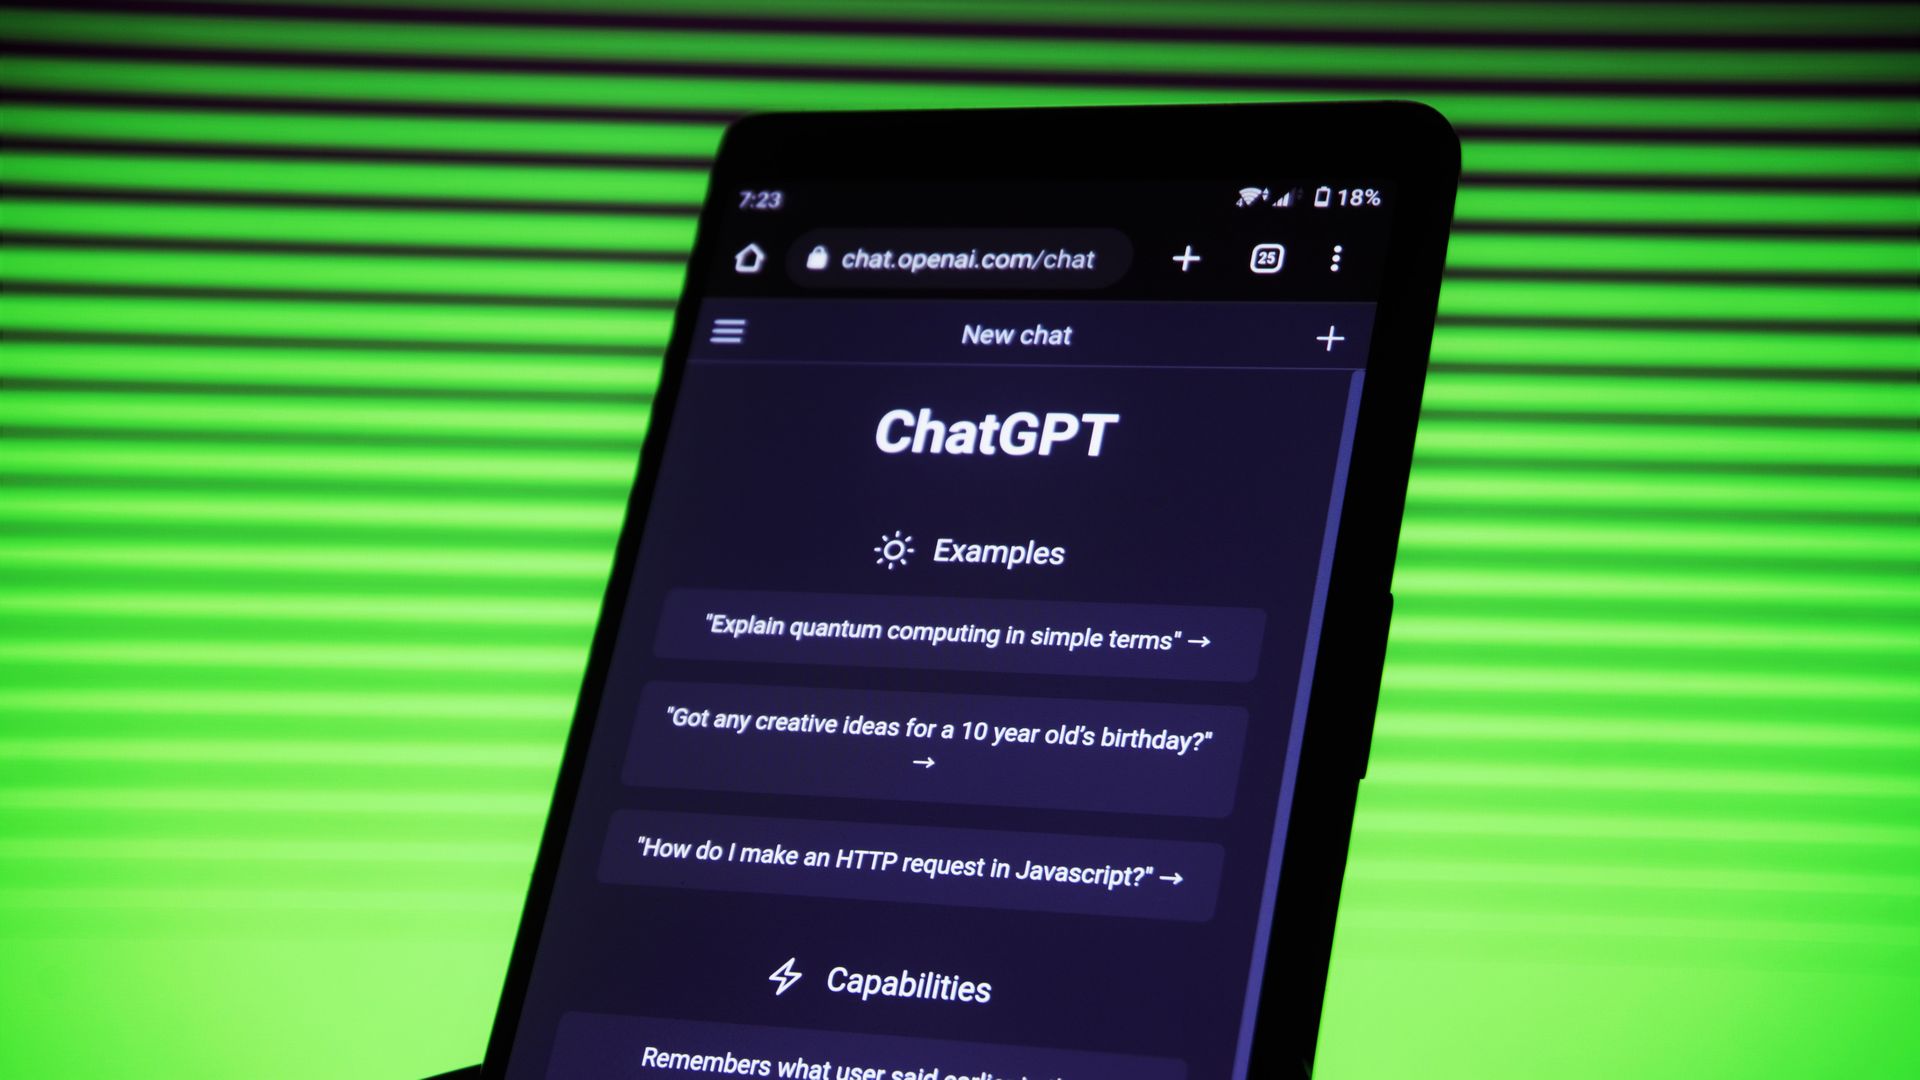 ChatGPT ia generativa inteligencia artificial